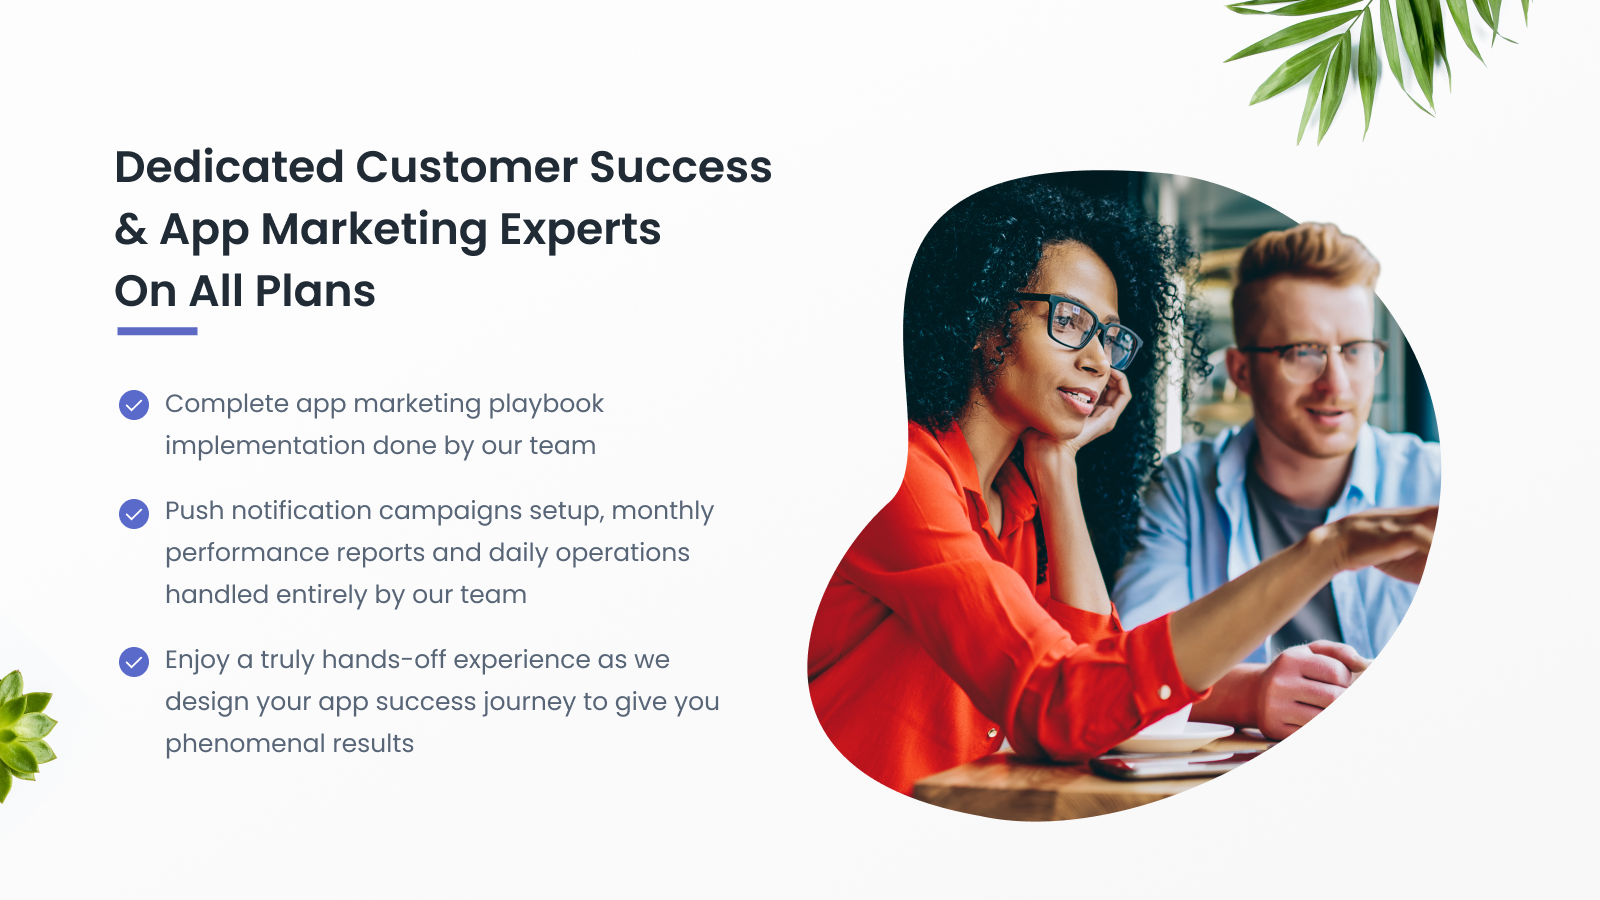 Dedicated Customer Success Experts